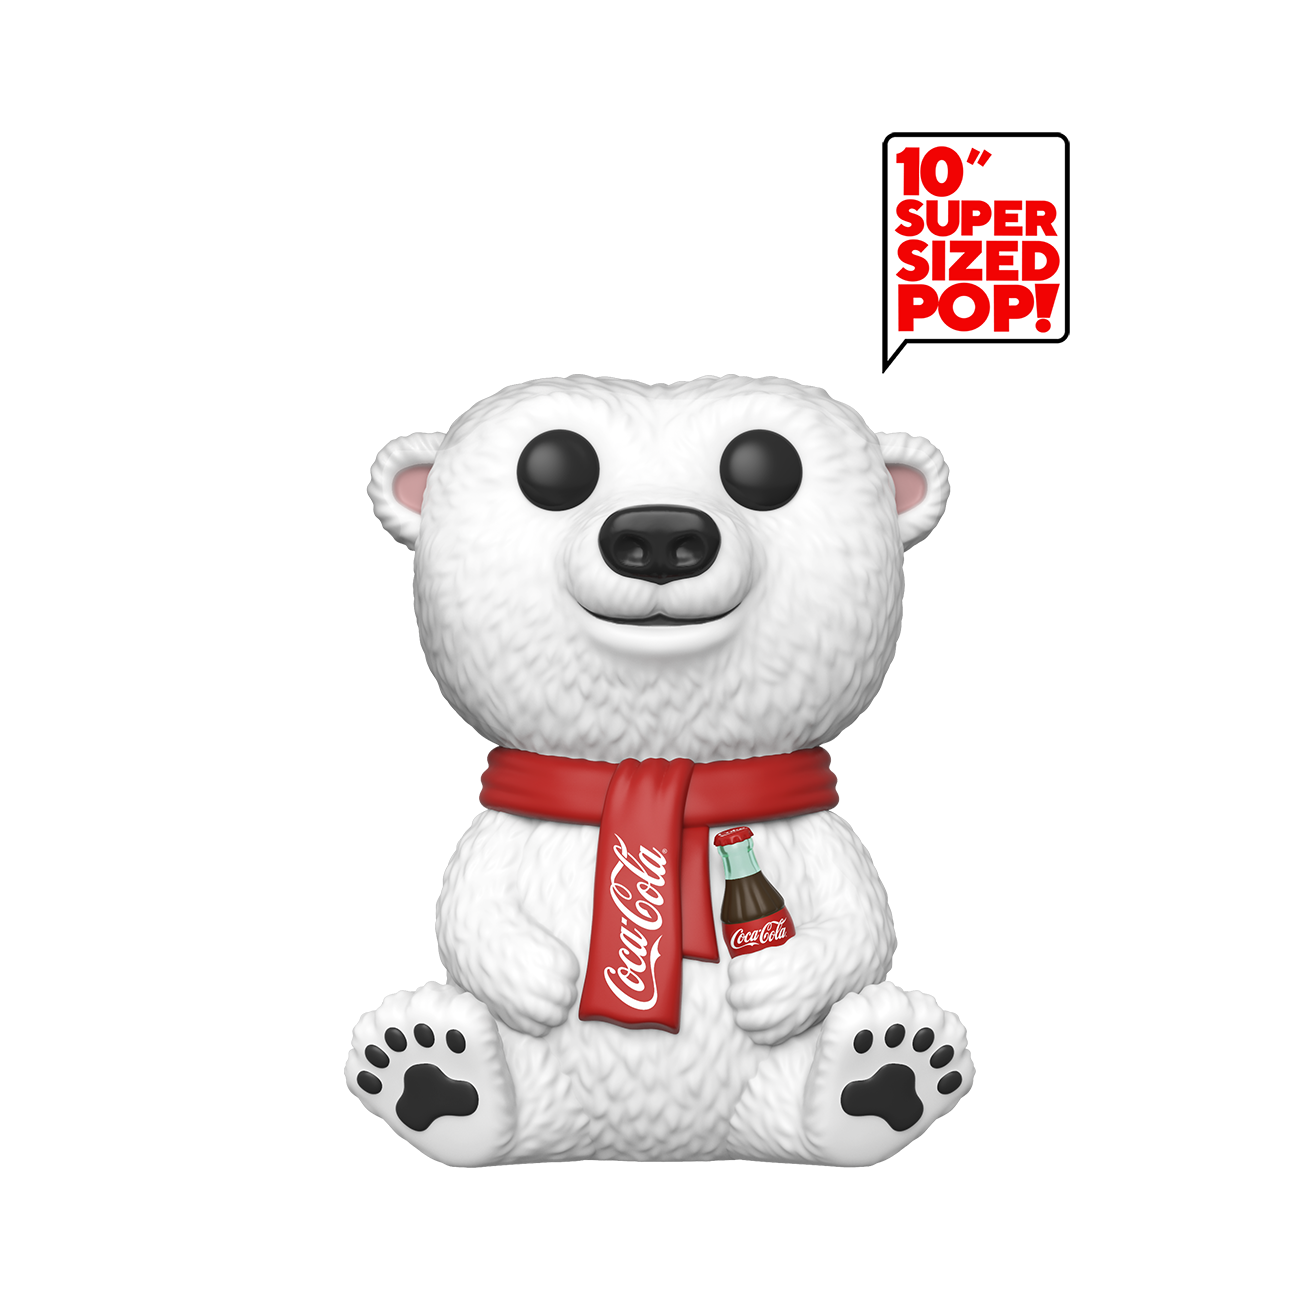 coca cola bear plush